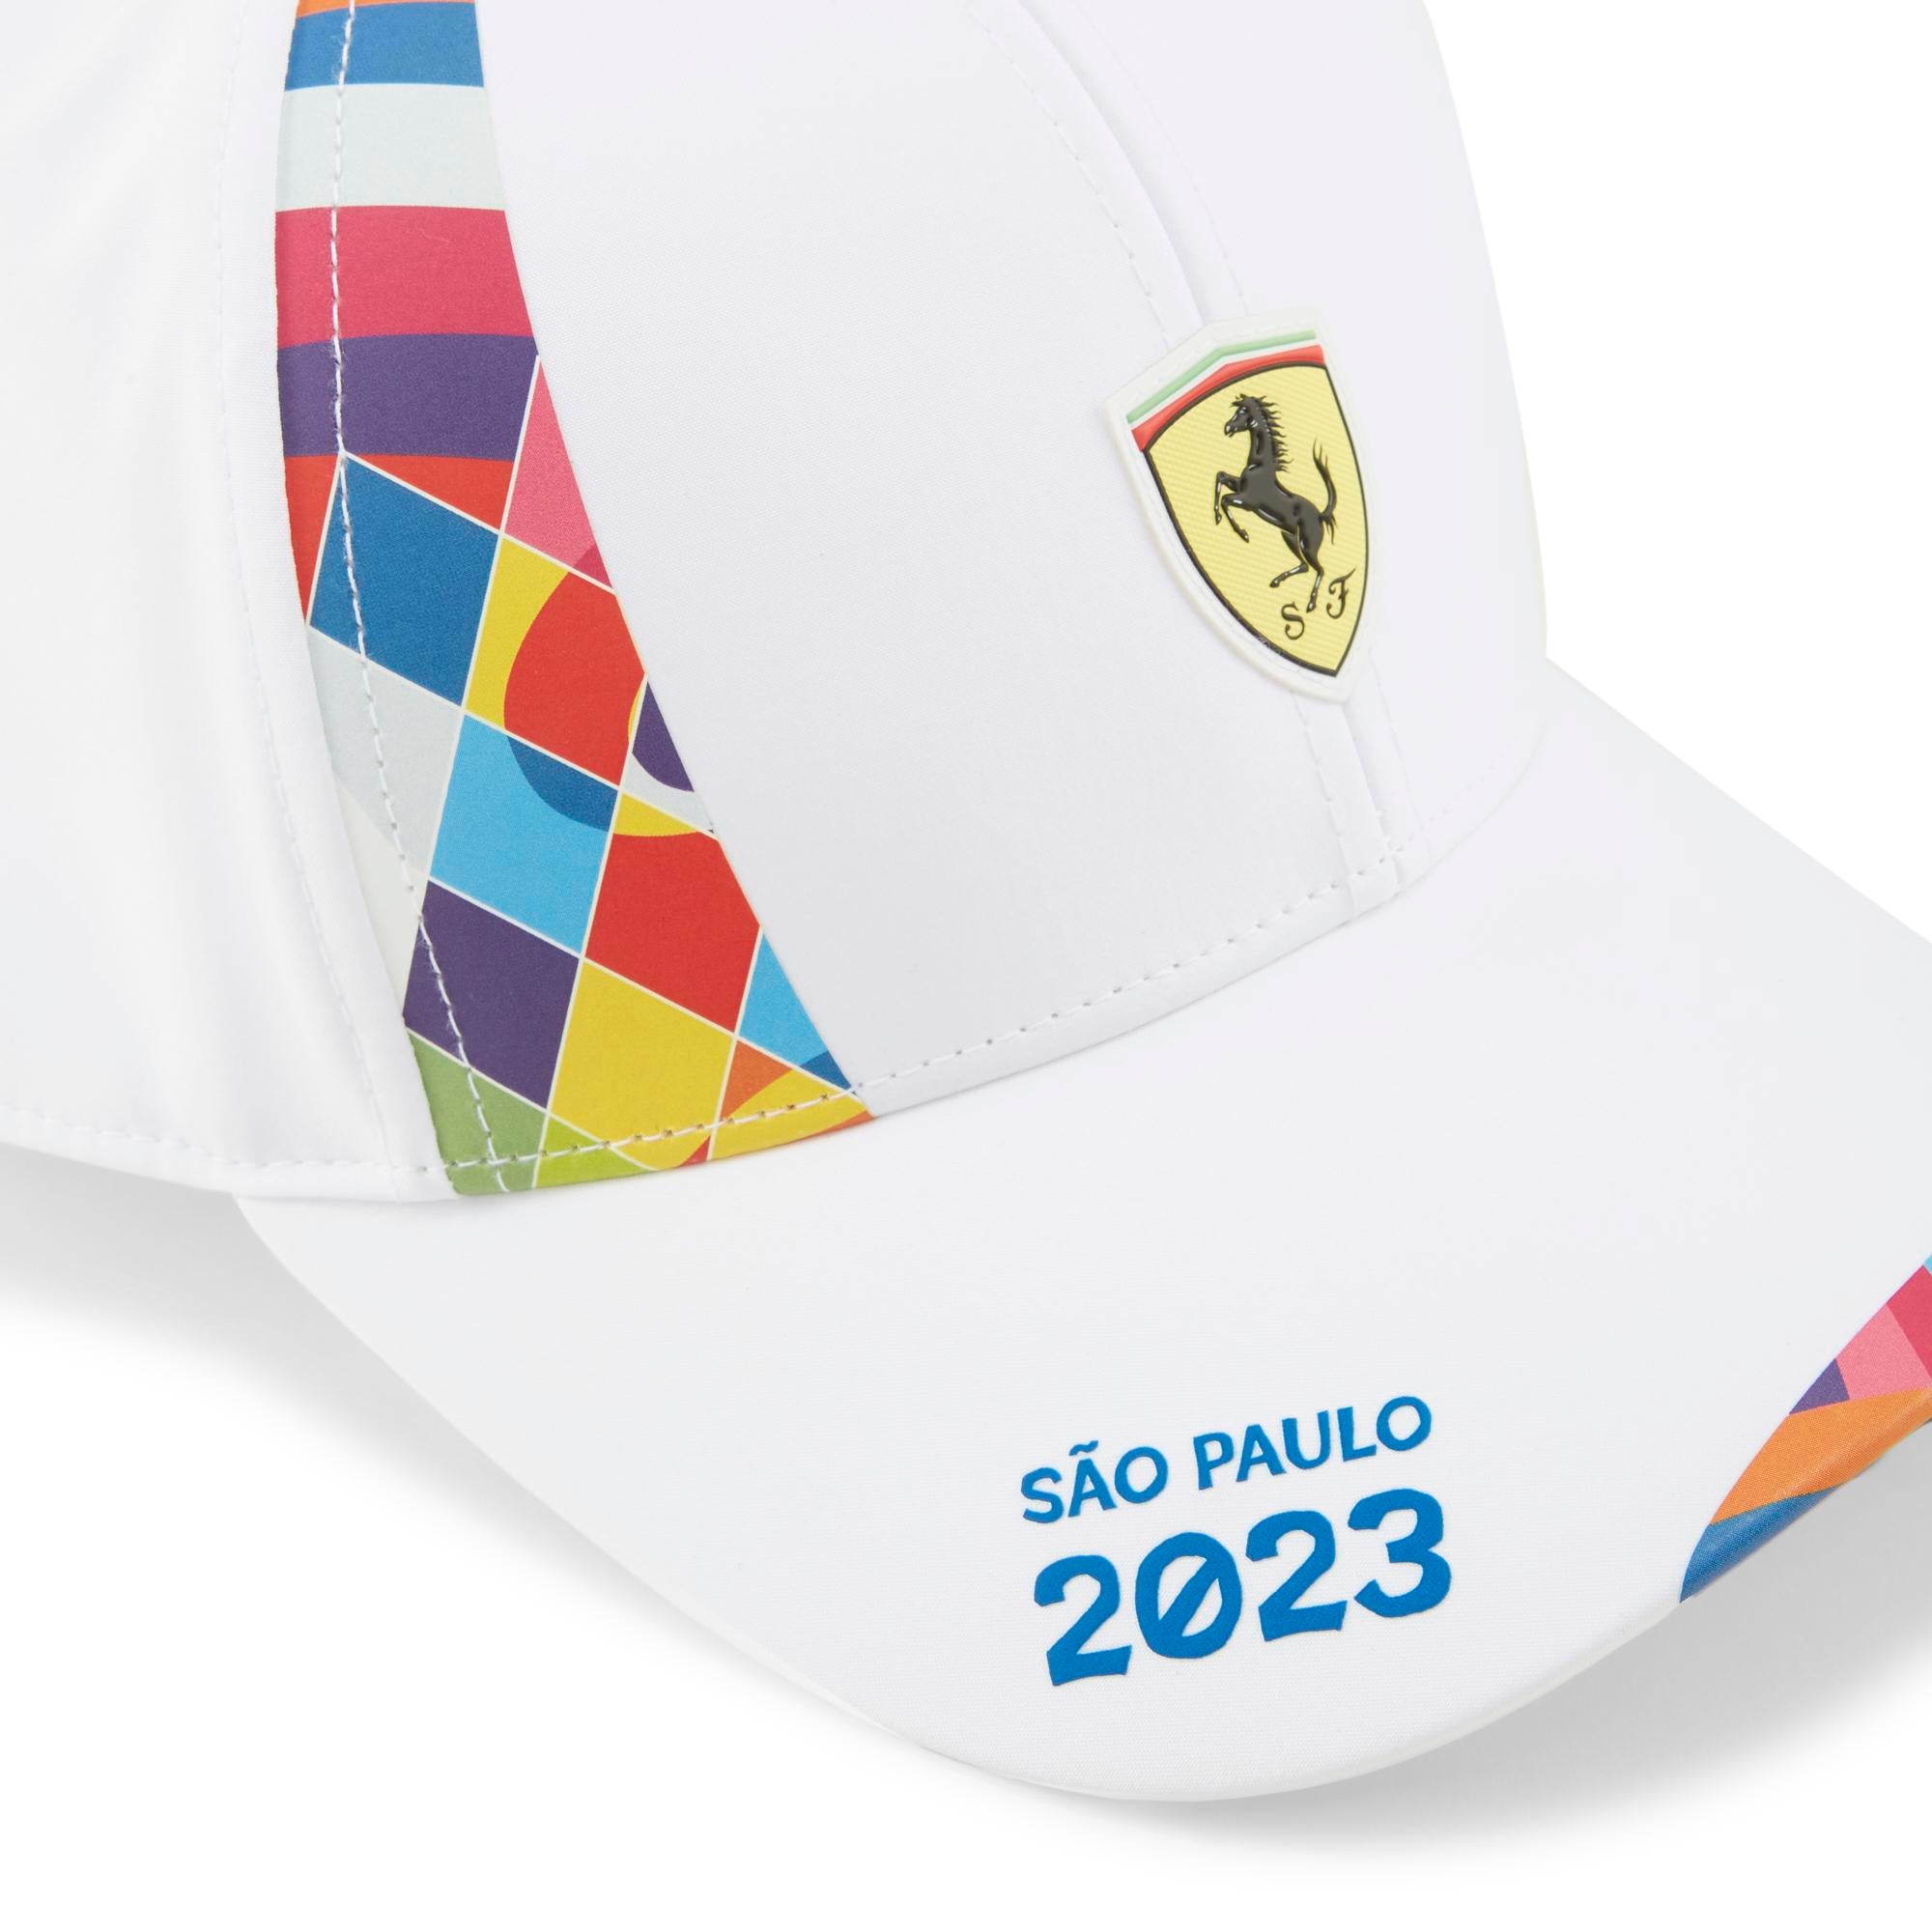 2023 Brazil GP Special Edition Cap - Scuderia Ferrari - Fueler store